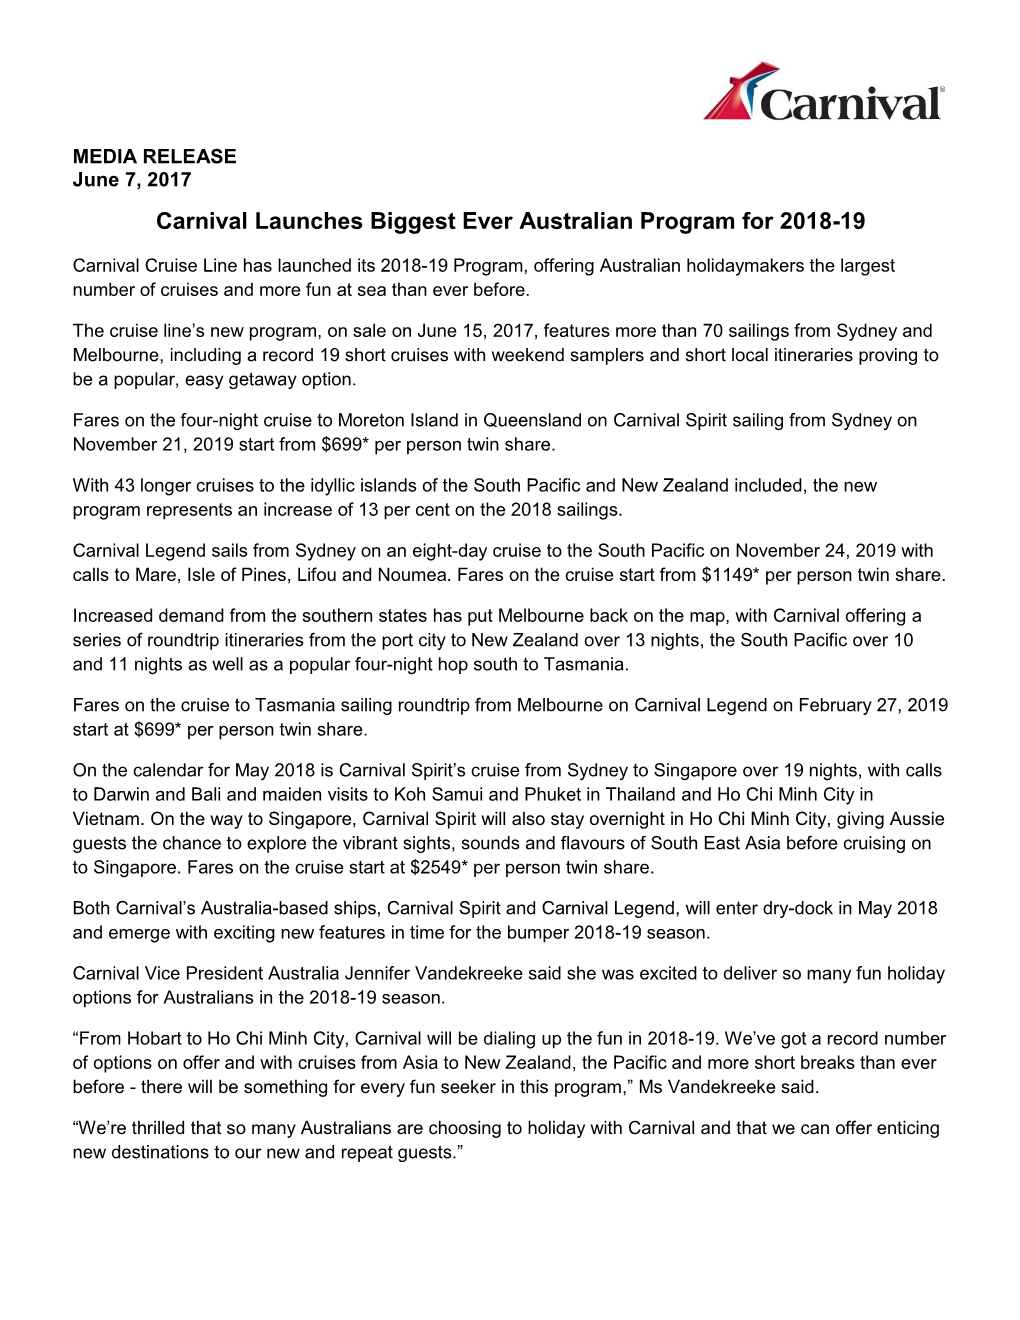 Carnival Launches Biggest Ever Australian Program for 2018-19